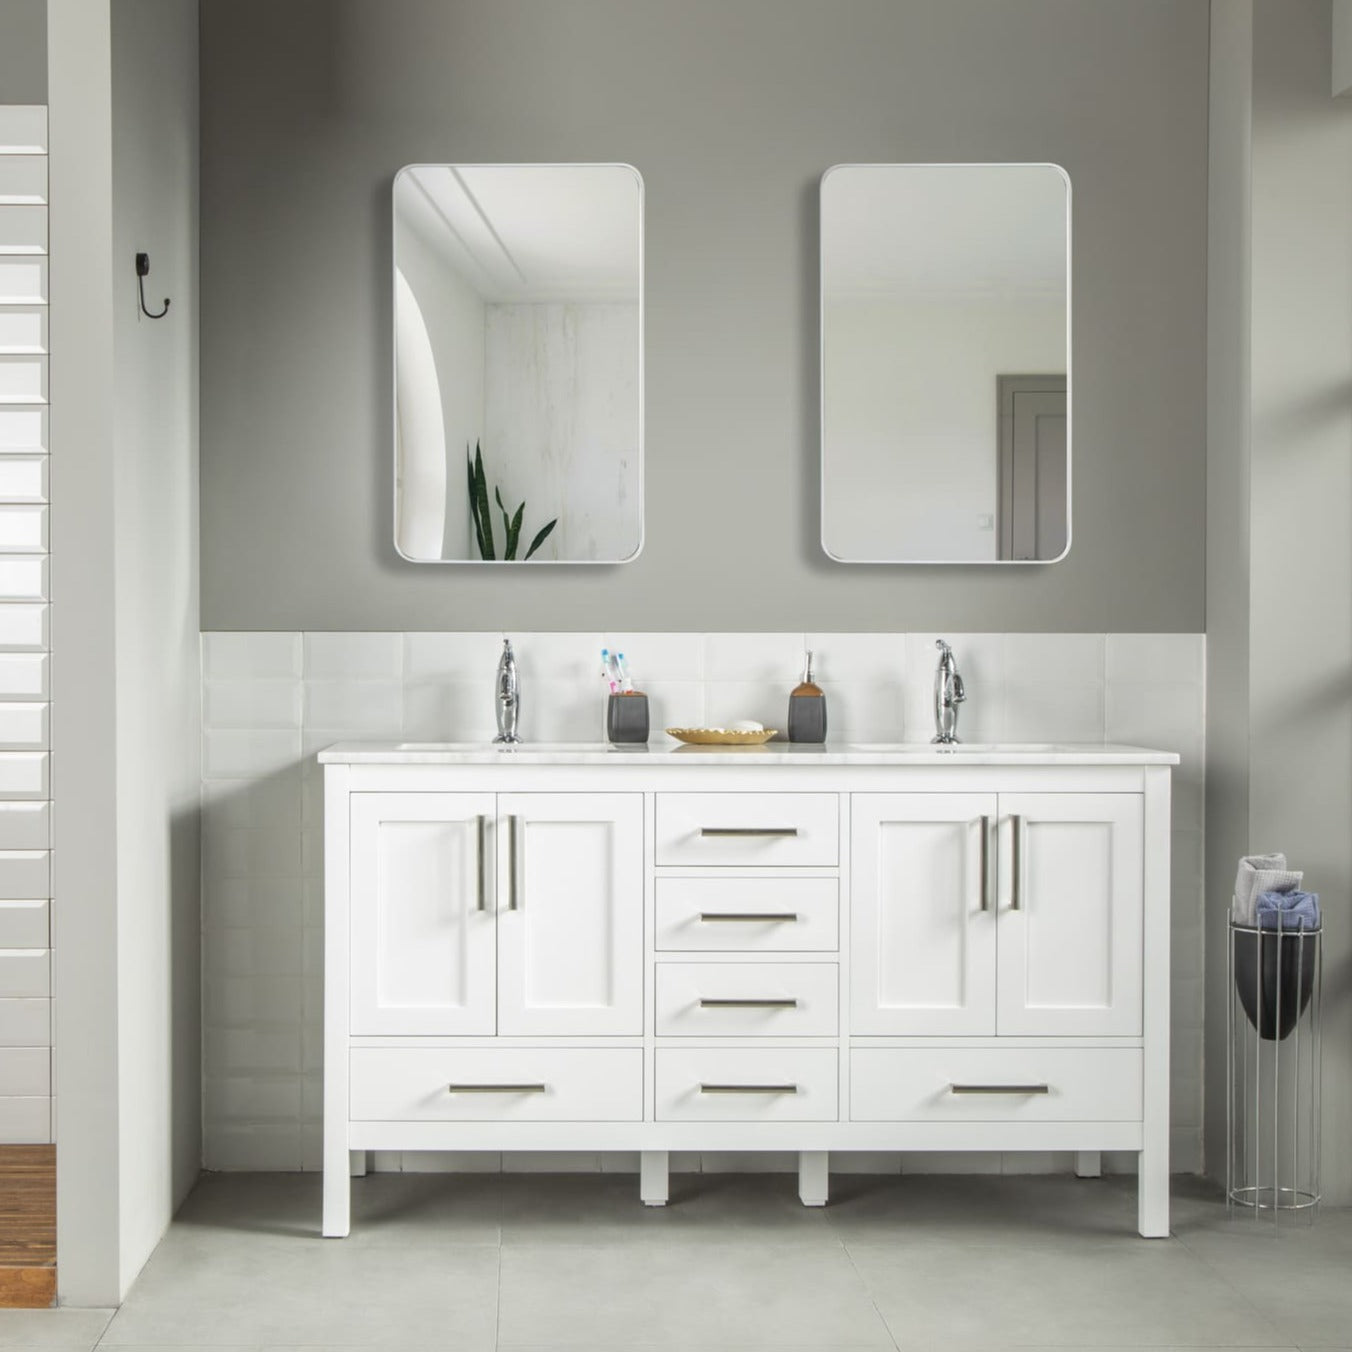 Ahley Bathroom Vanity Homelero 60"  #size_60" Double   #color_white  #hardware_brushed nickel